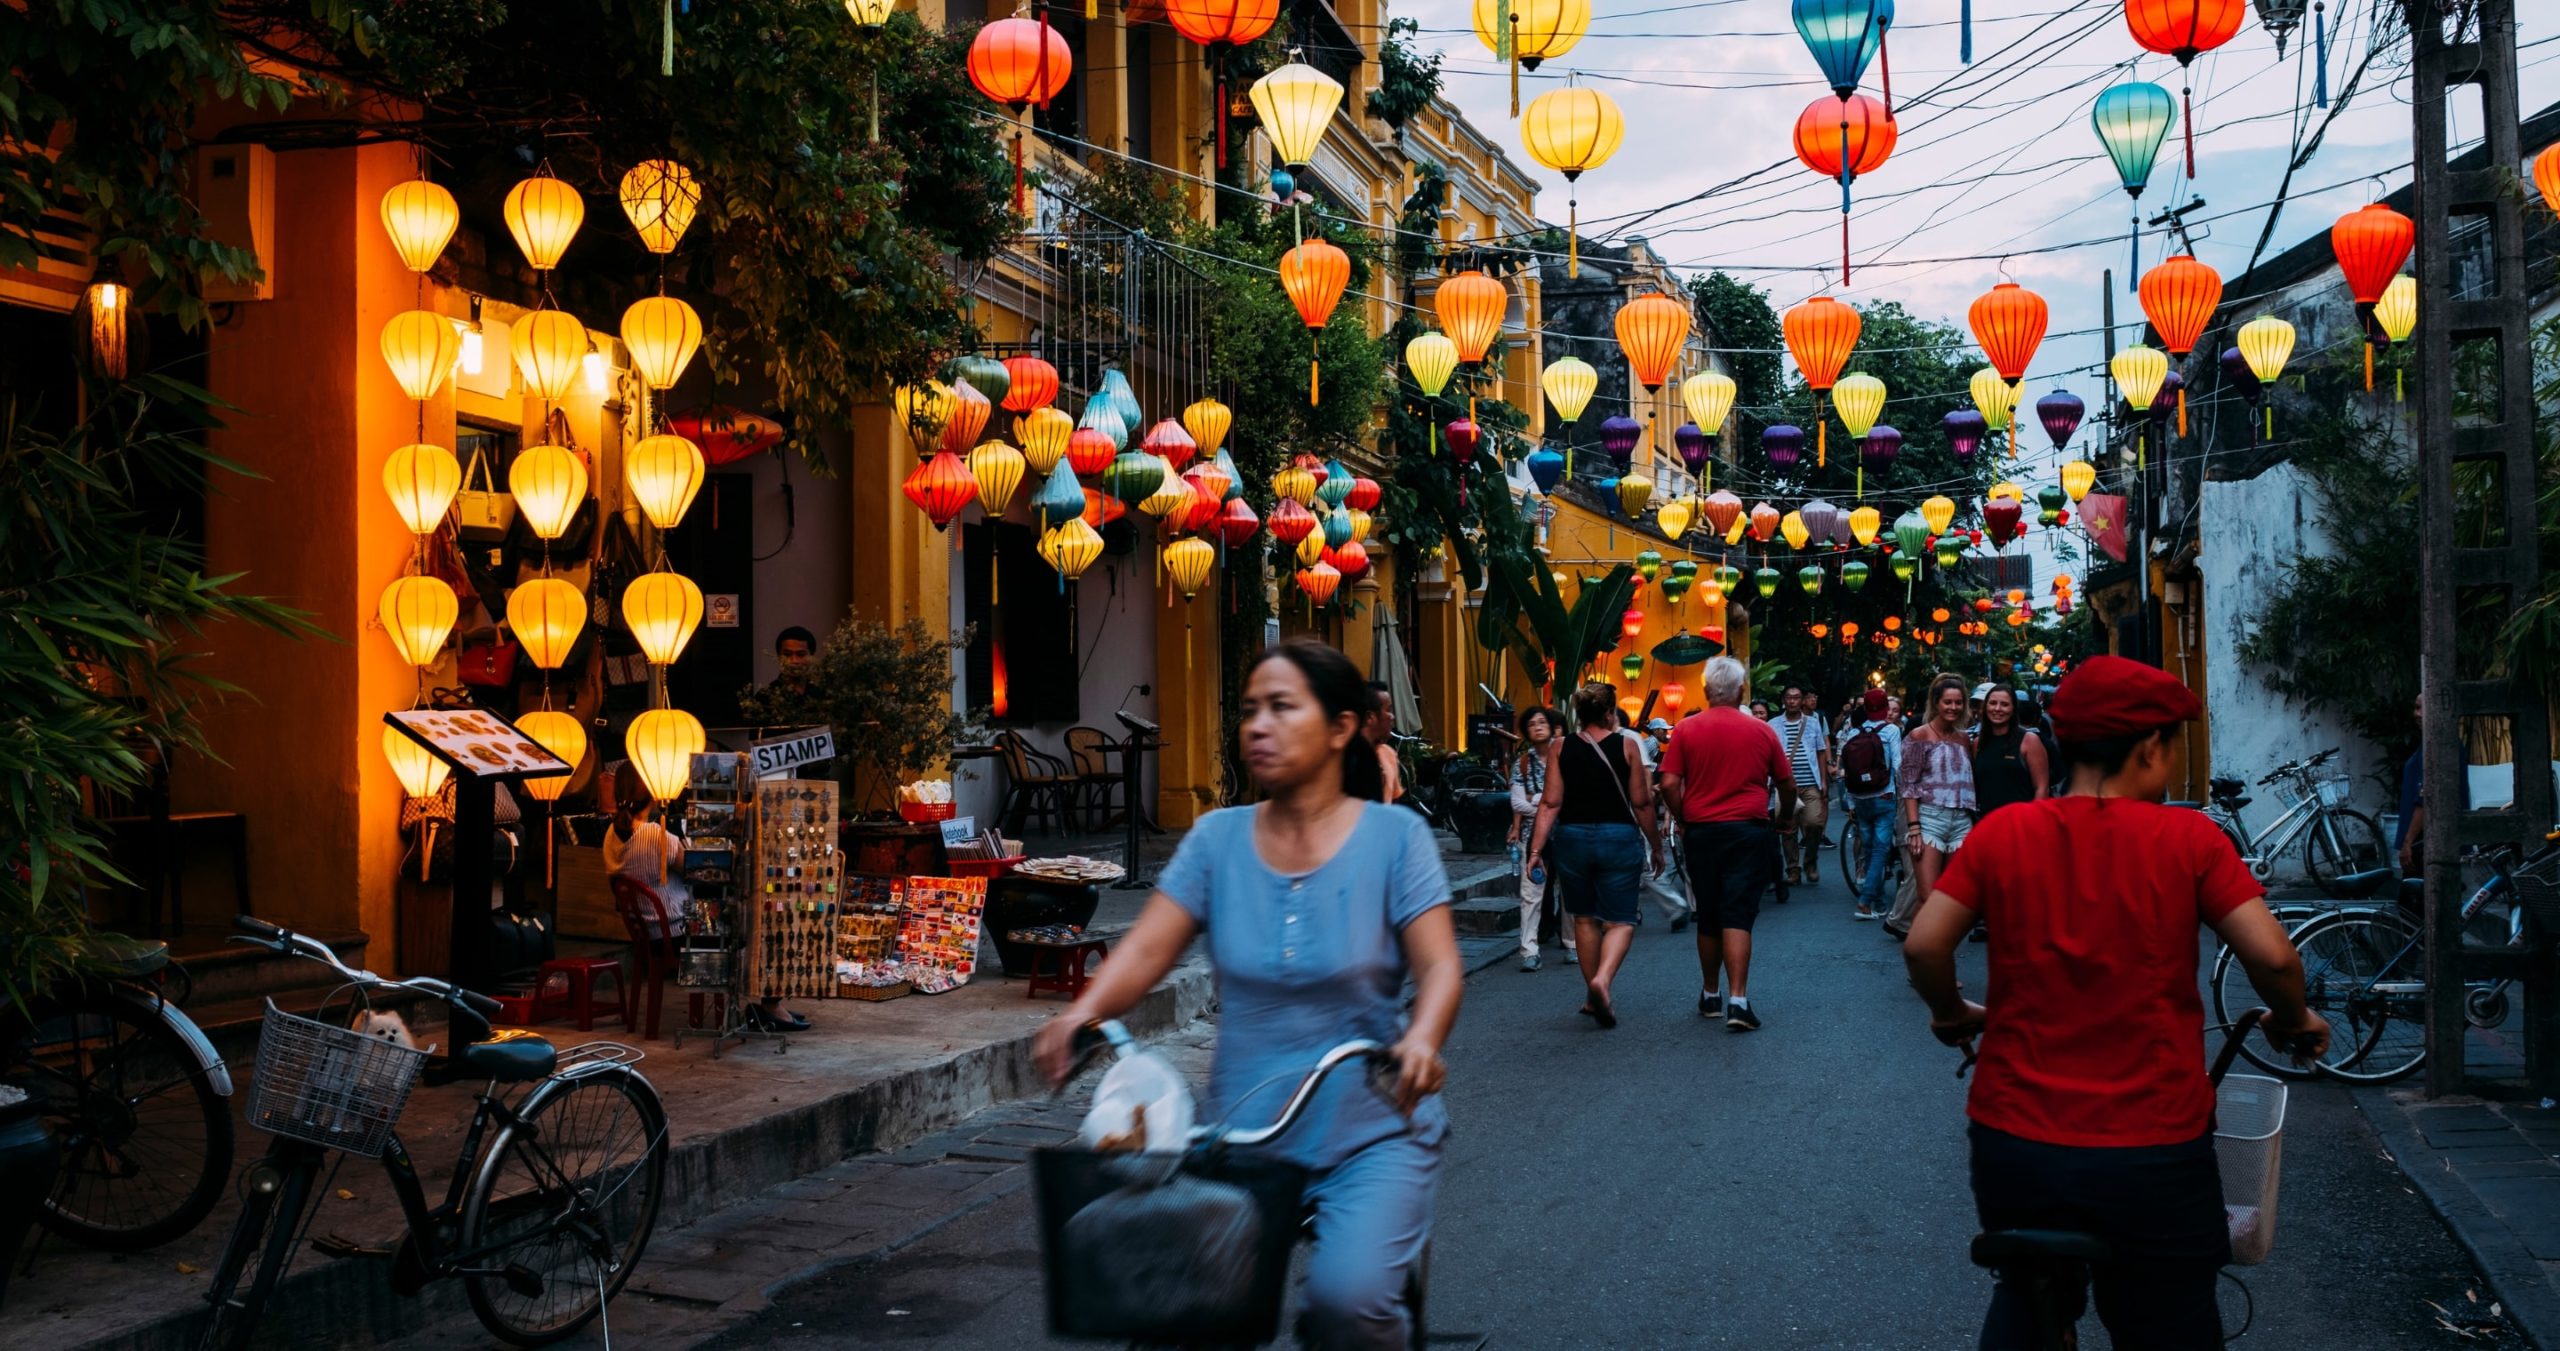 A typical Vietnamese street